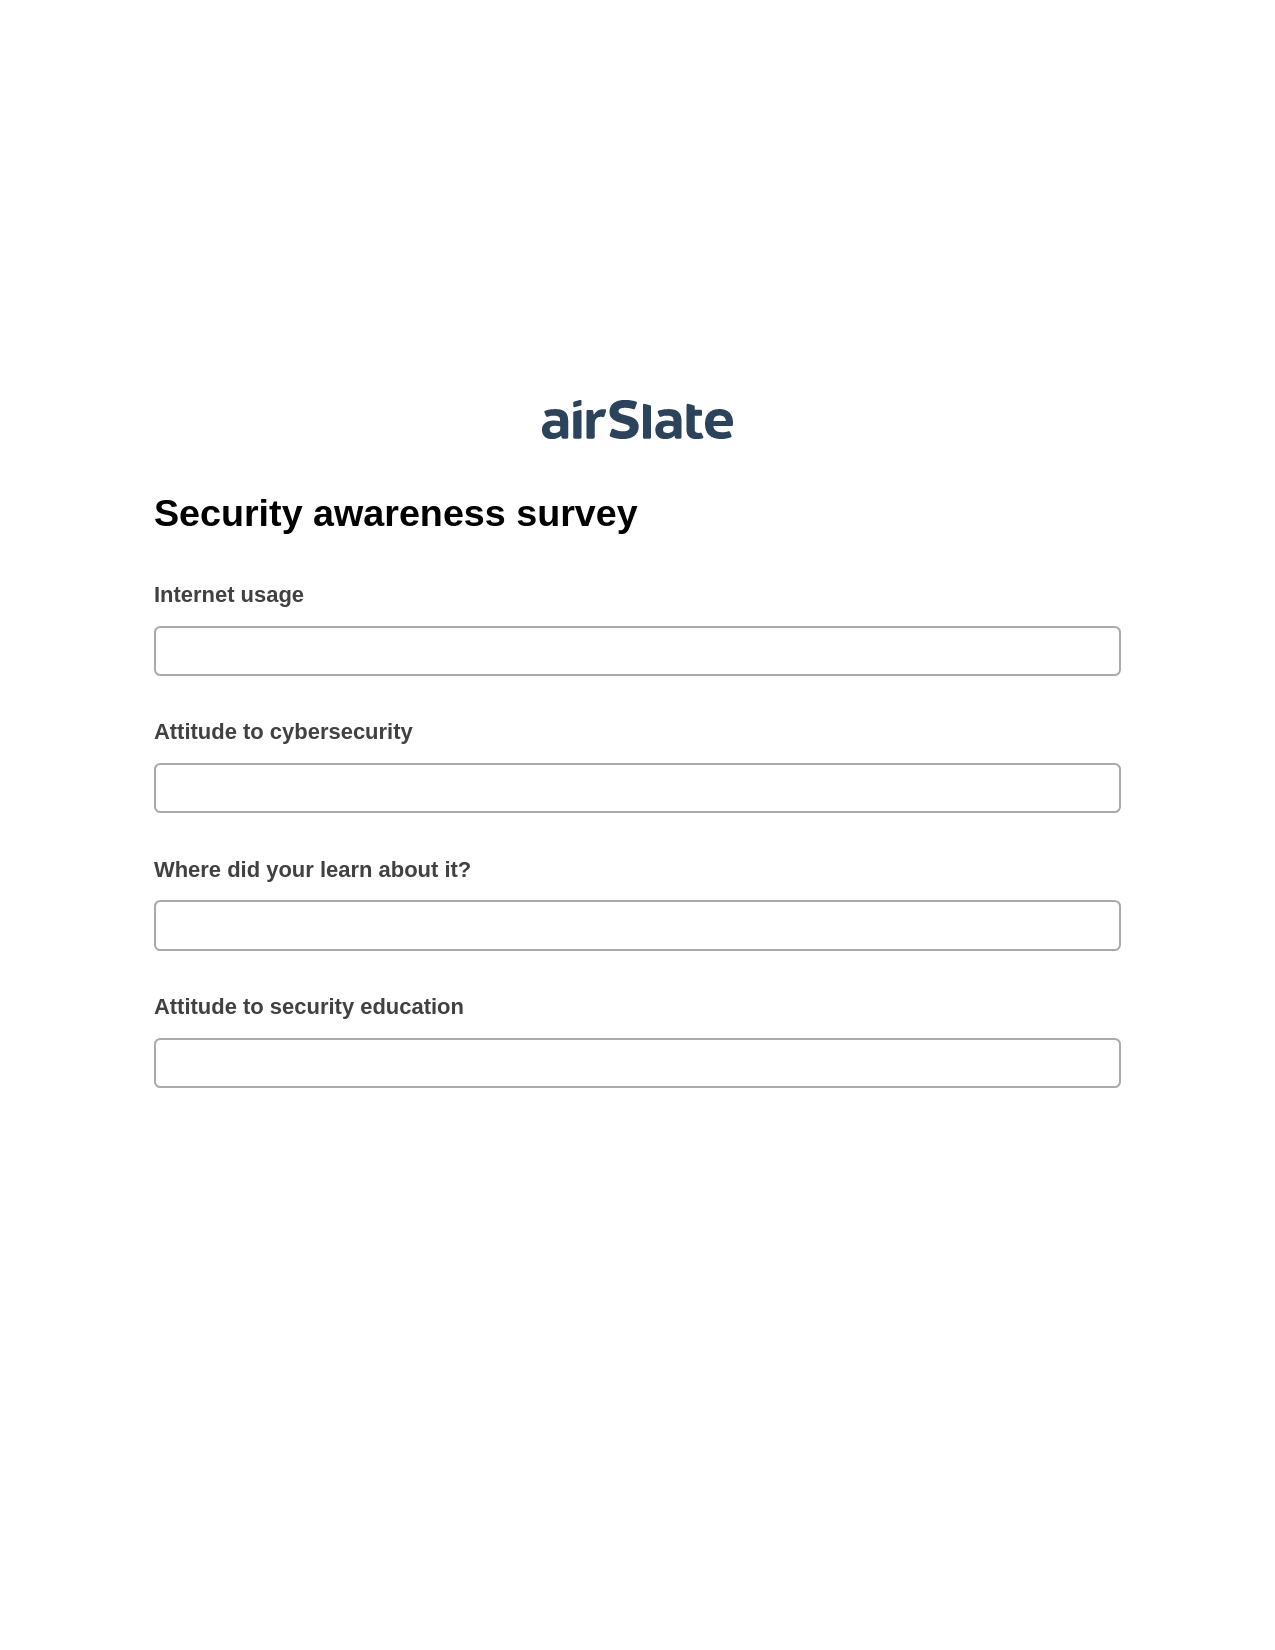 Multirole Security awareness survey Pre-fill from NetSuite Records Bot, Google Calendar Bot, Webhook Postfinish Bot